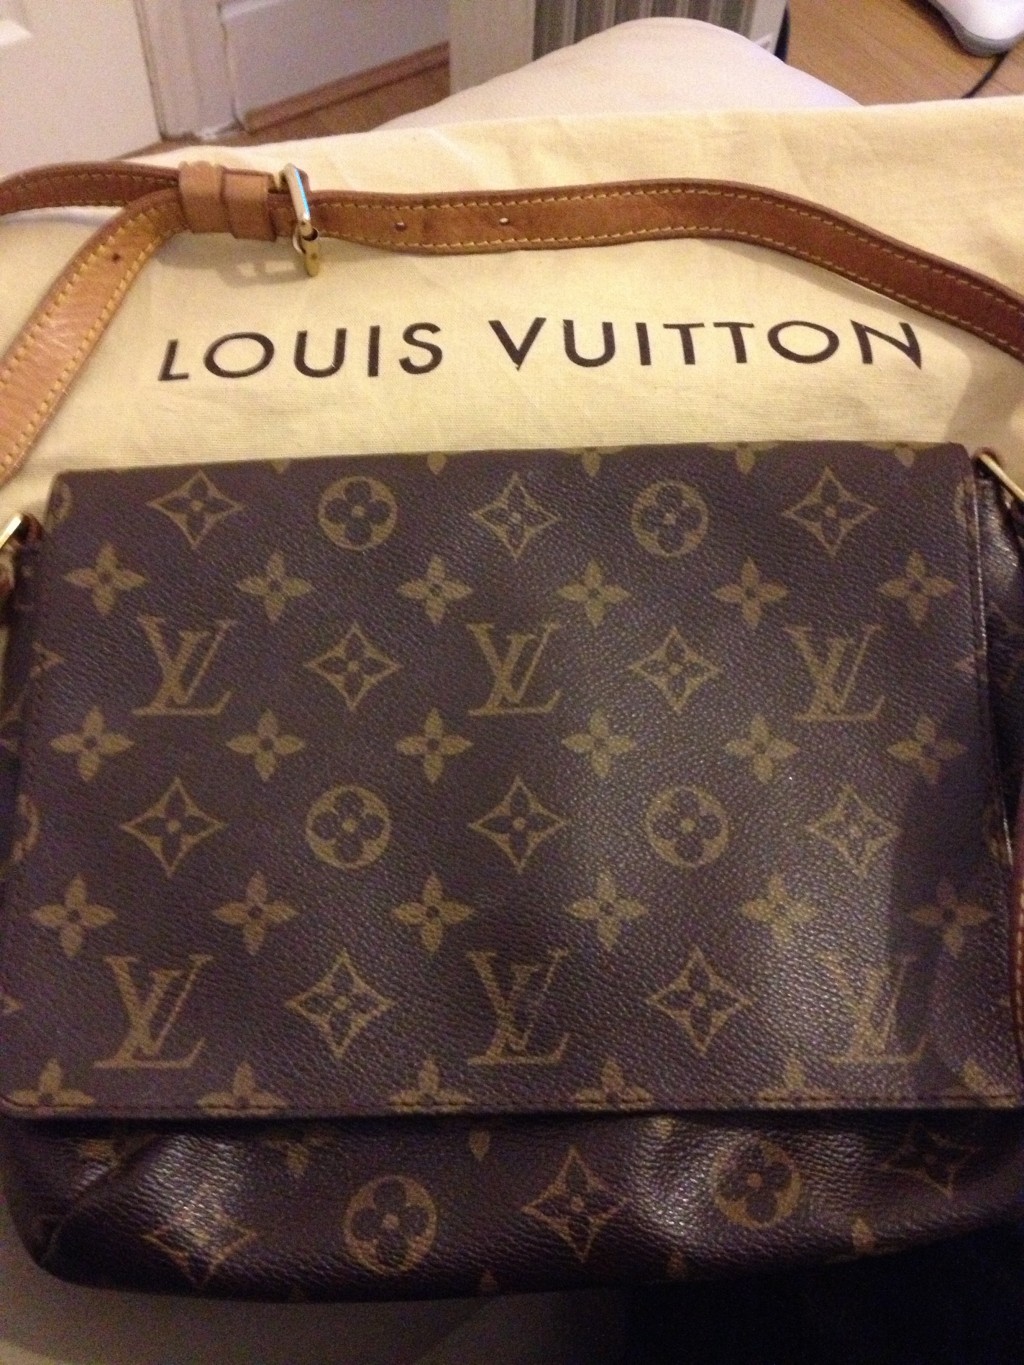 Louis Vuitton Handbags - Real VS Fake | HubPages